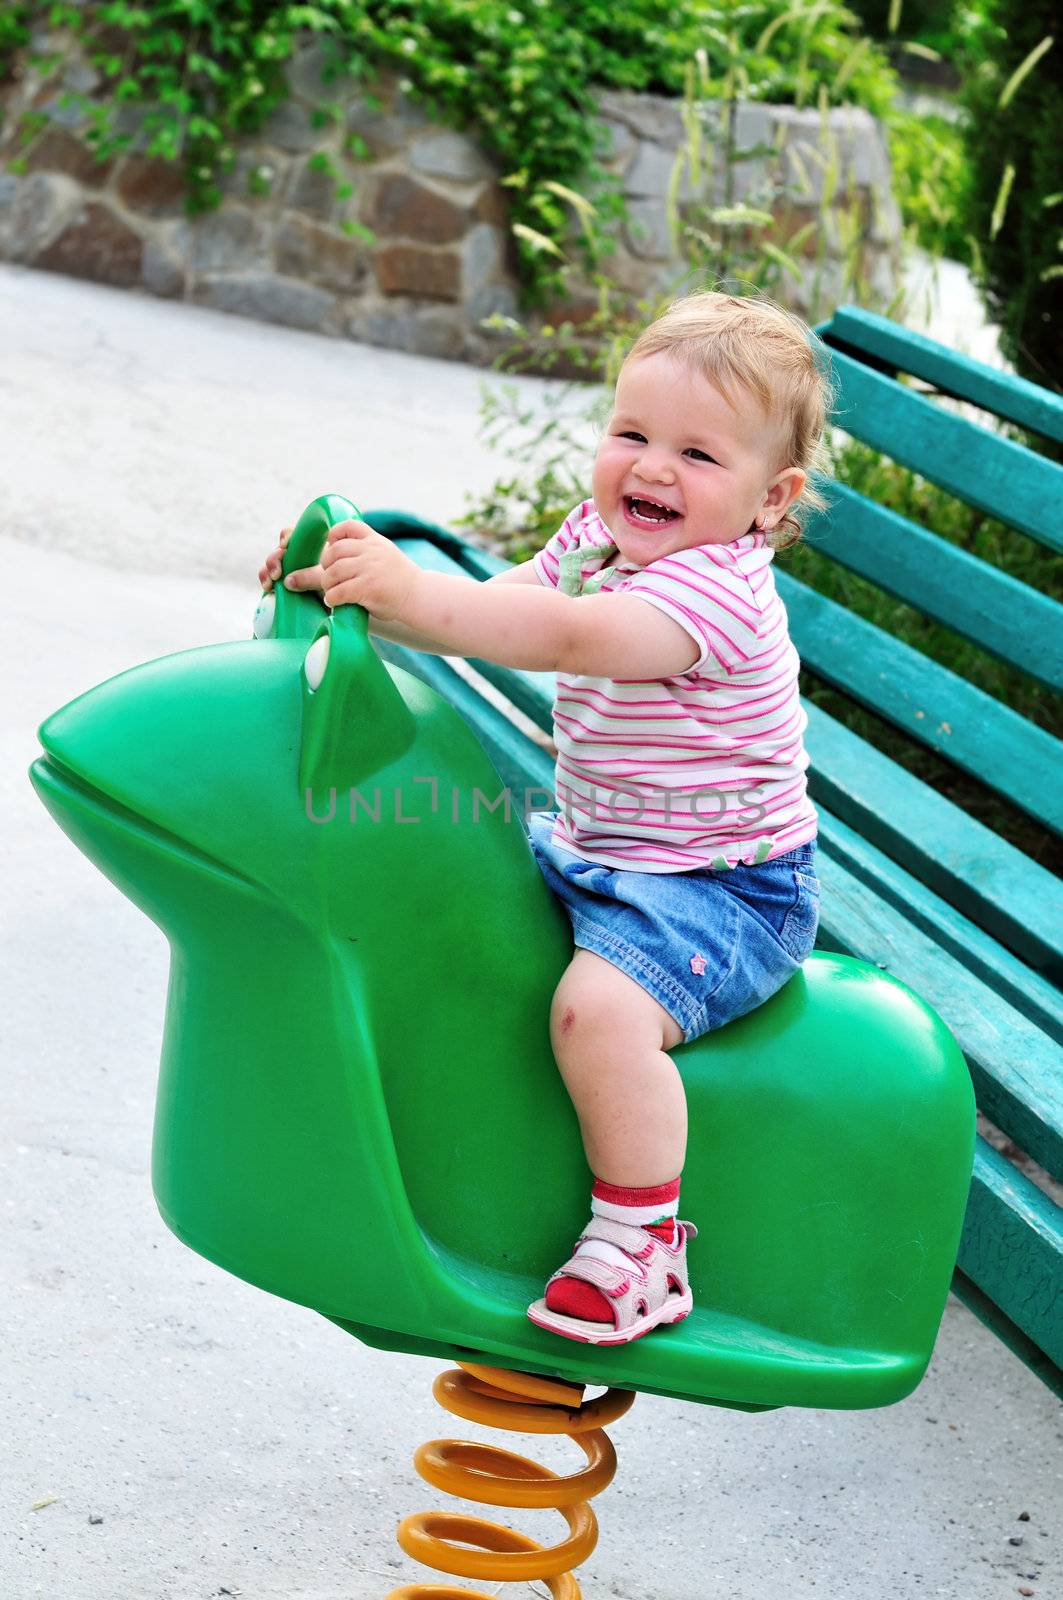 Small funny girl girl on spring frog swing